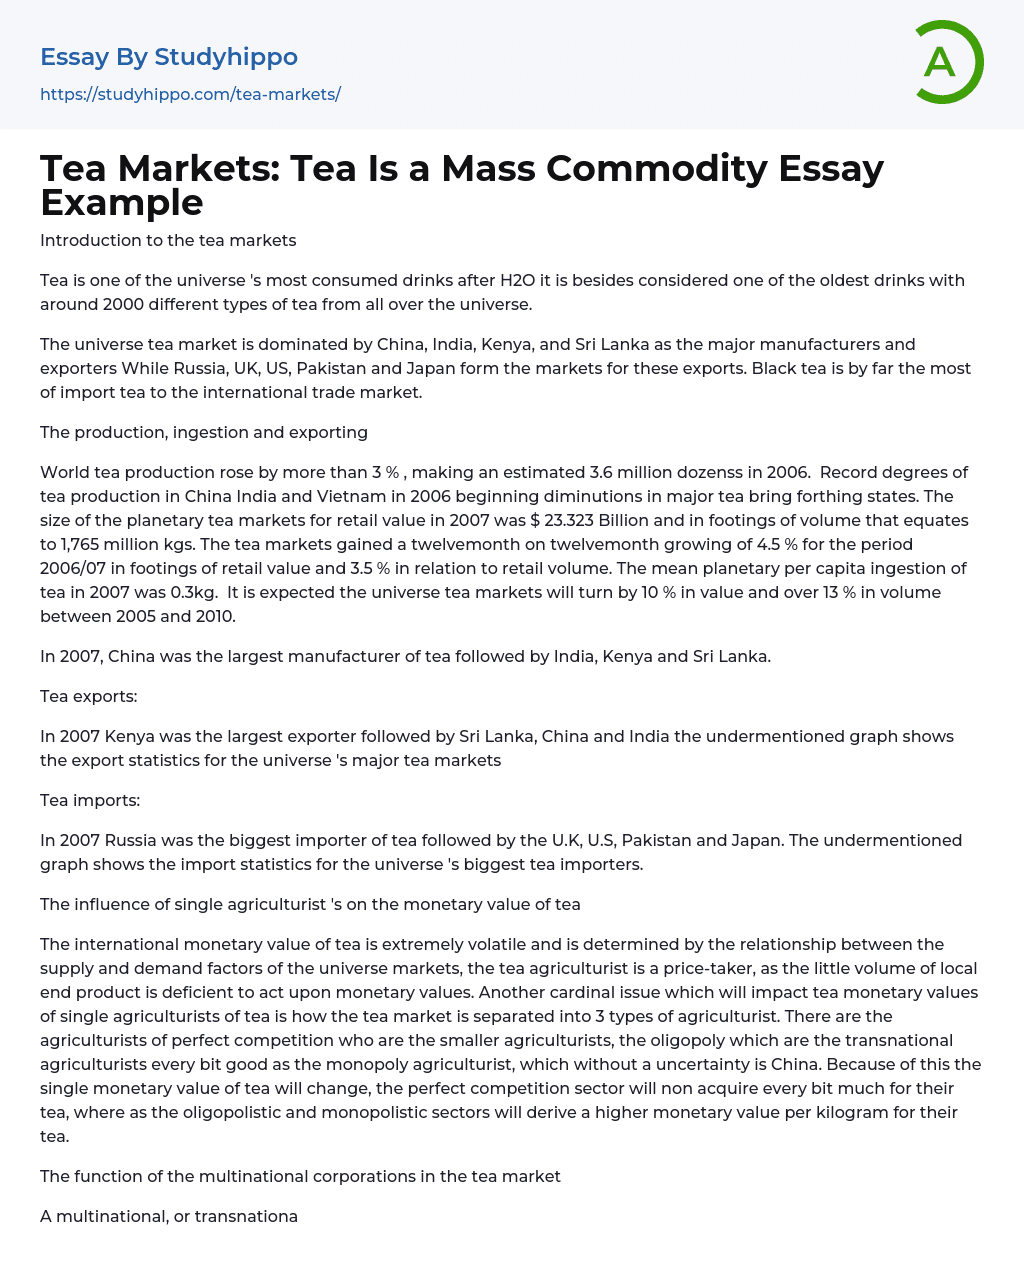 Tea Markets: Tea Is a Mass Commodity Essay Example